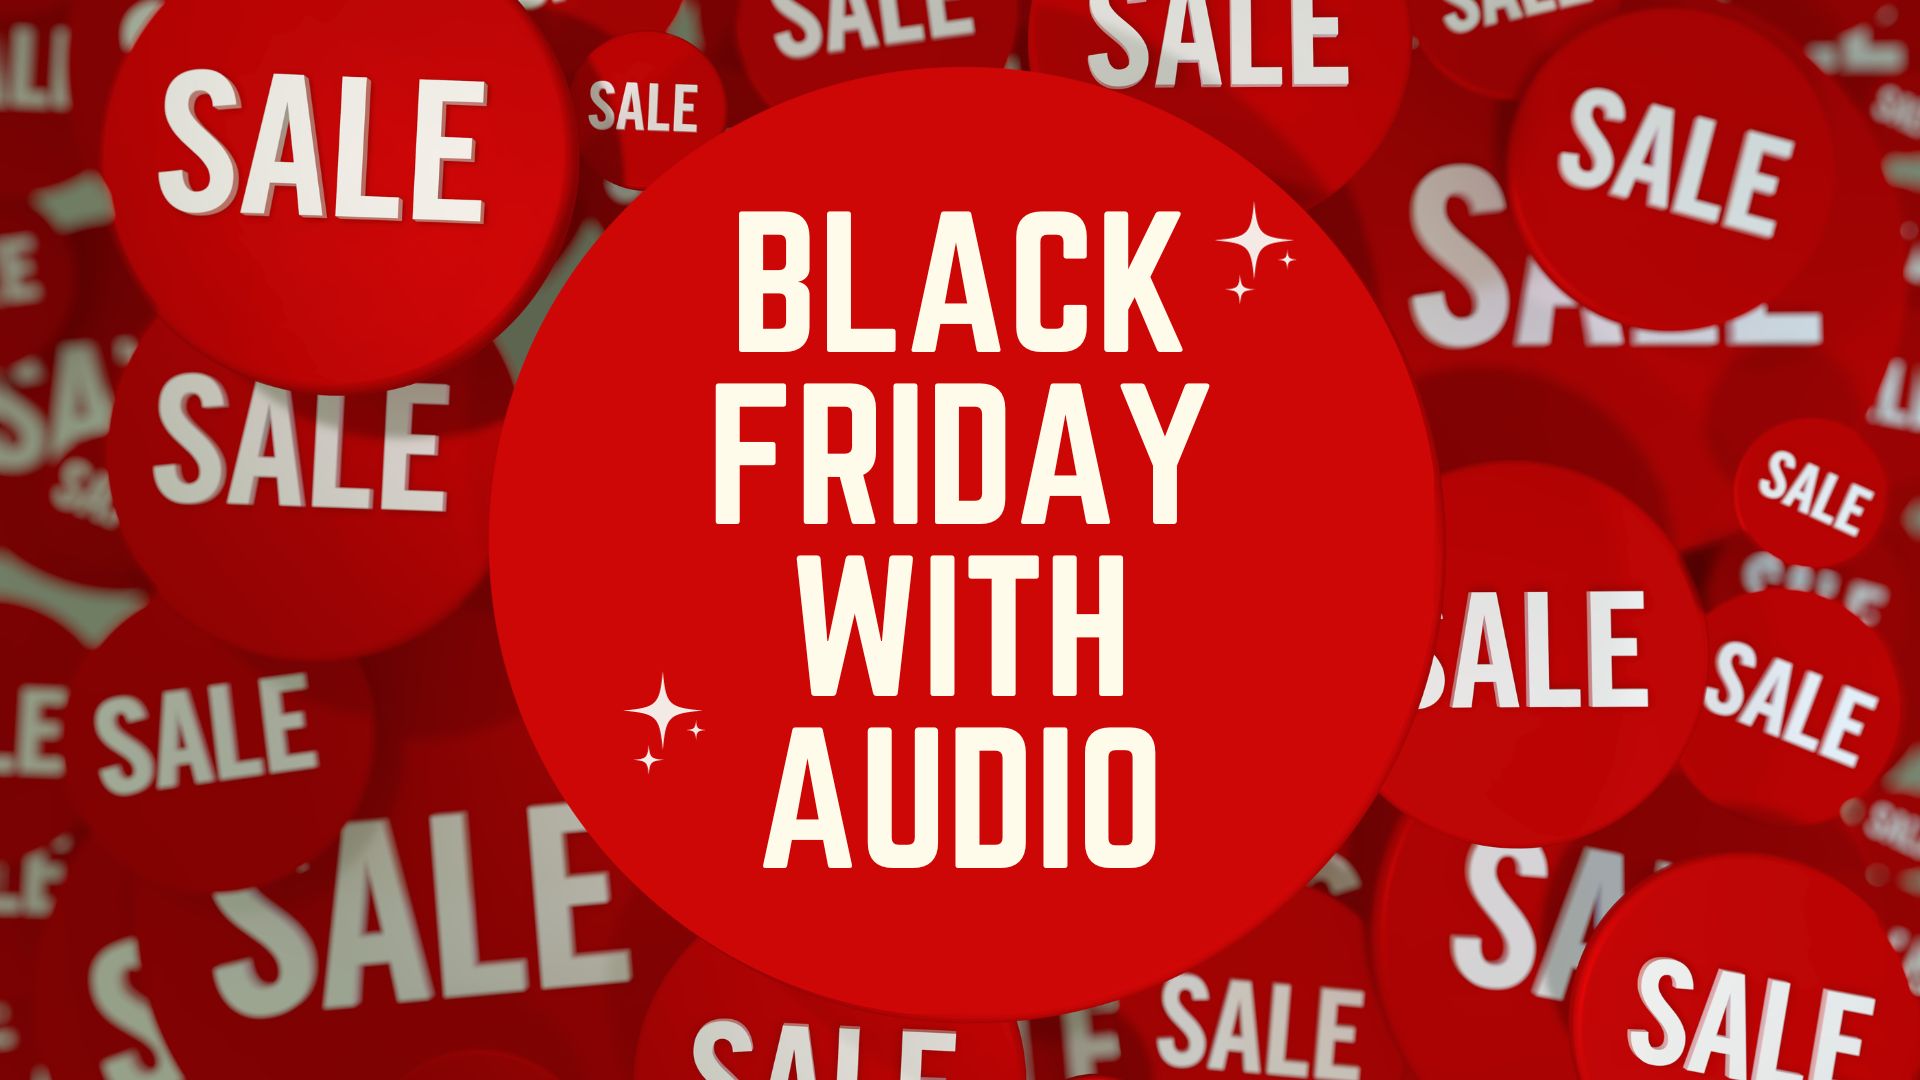 Black Friday marketing with audio ads